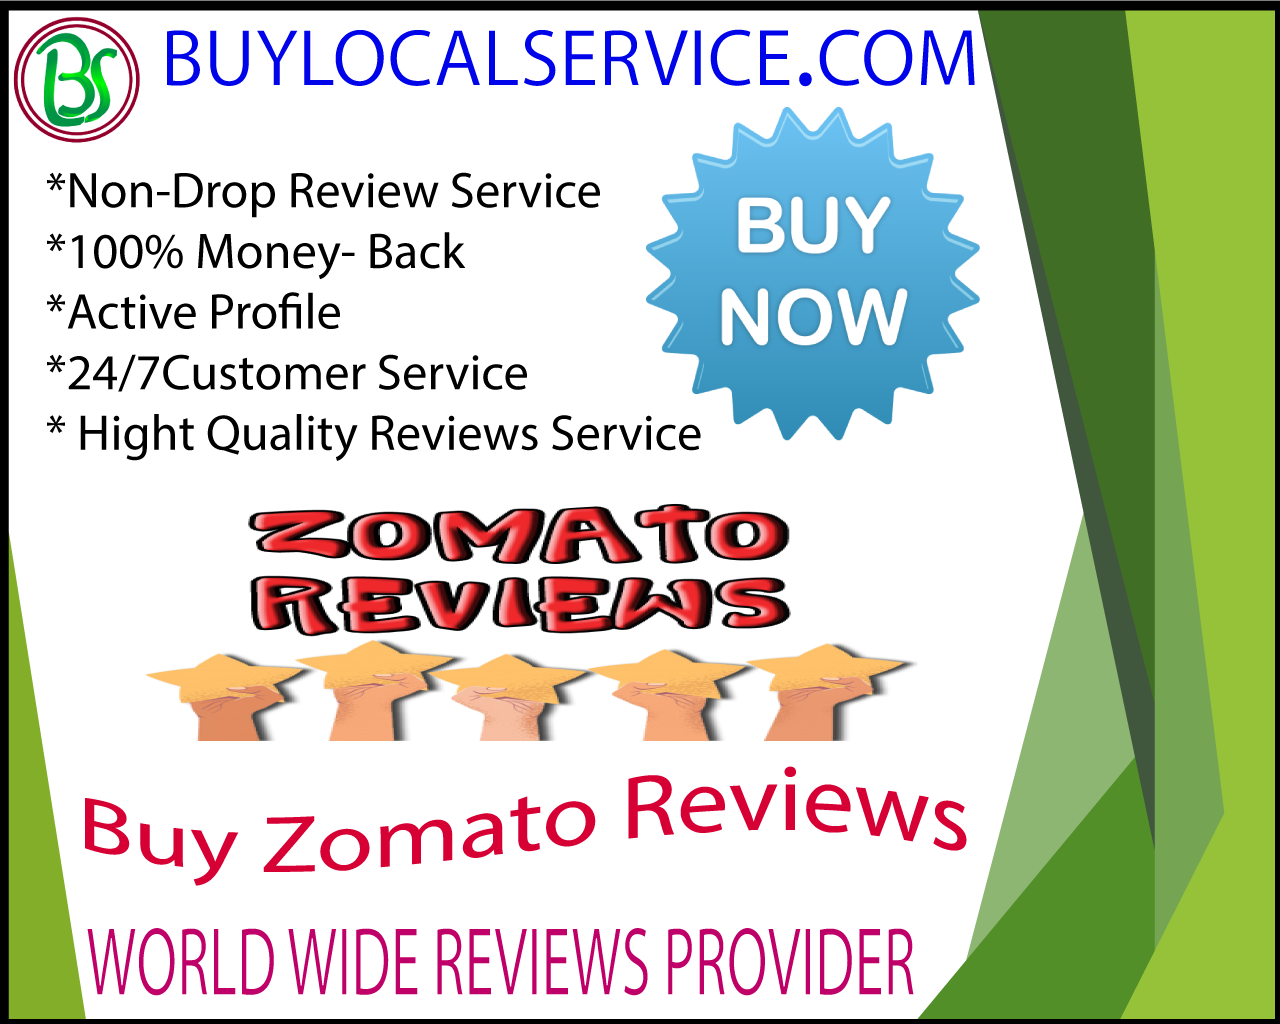 Buy Zomato Reviews - 100% safe & non-drop 5 star review